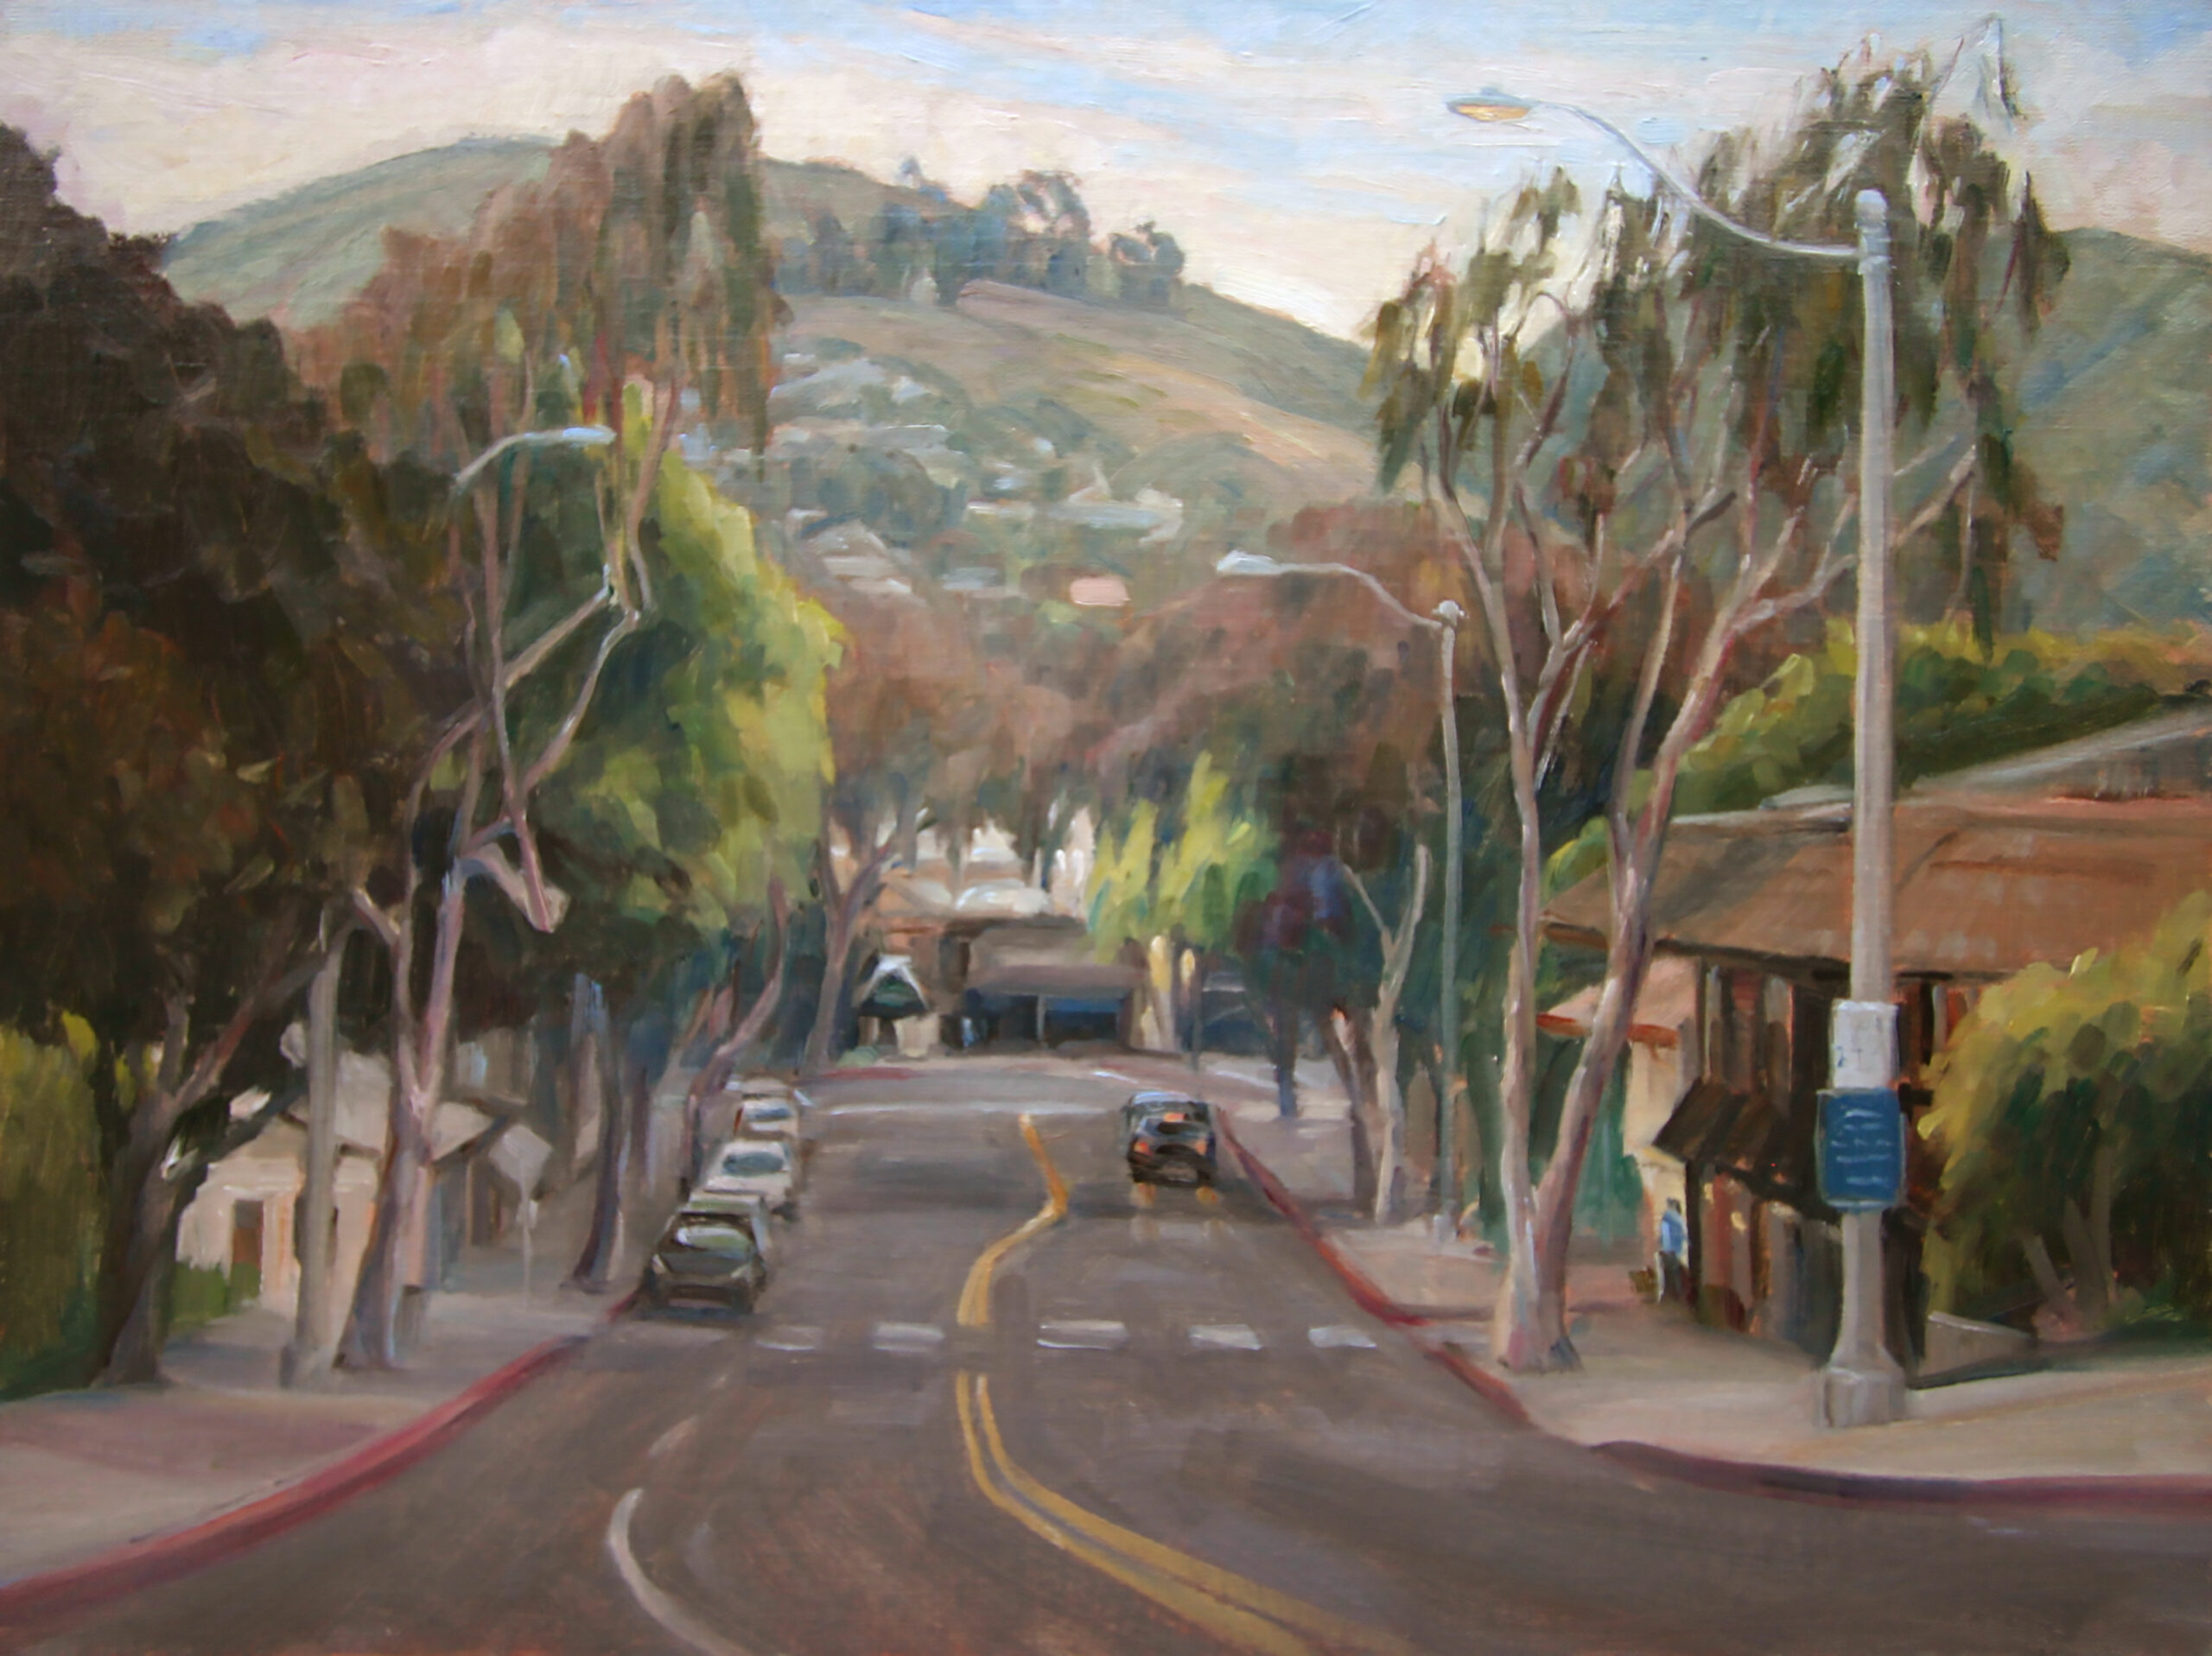 "Glenneyre Street, Laguna," by Lisa Mozzini-McDill